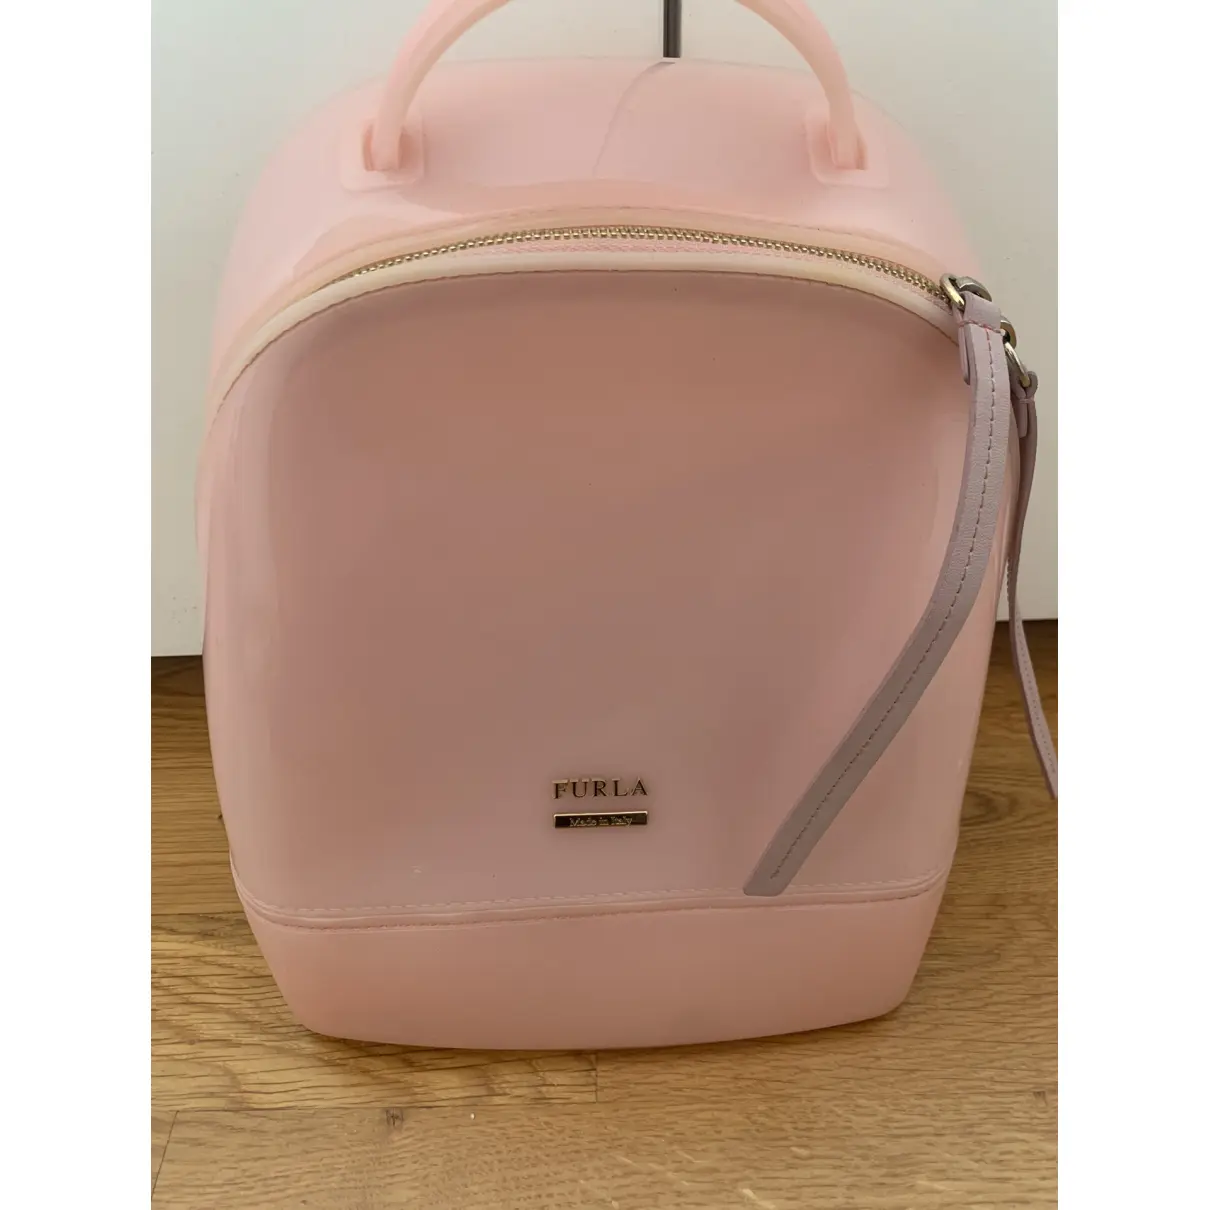 Buy Furla Candy Bag vinyl backpack online